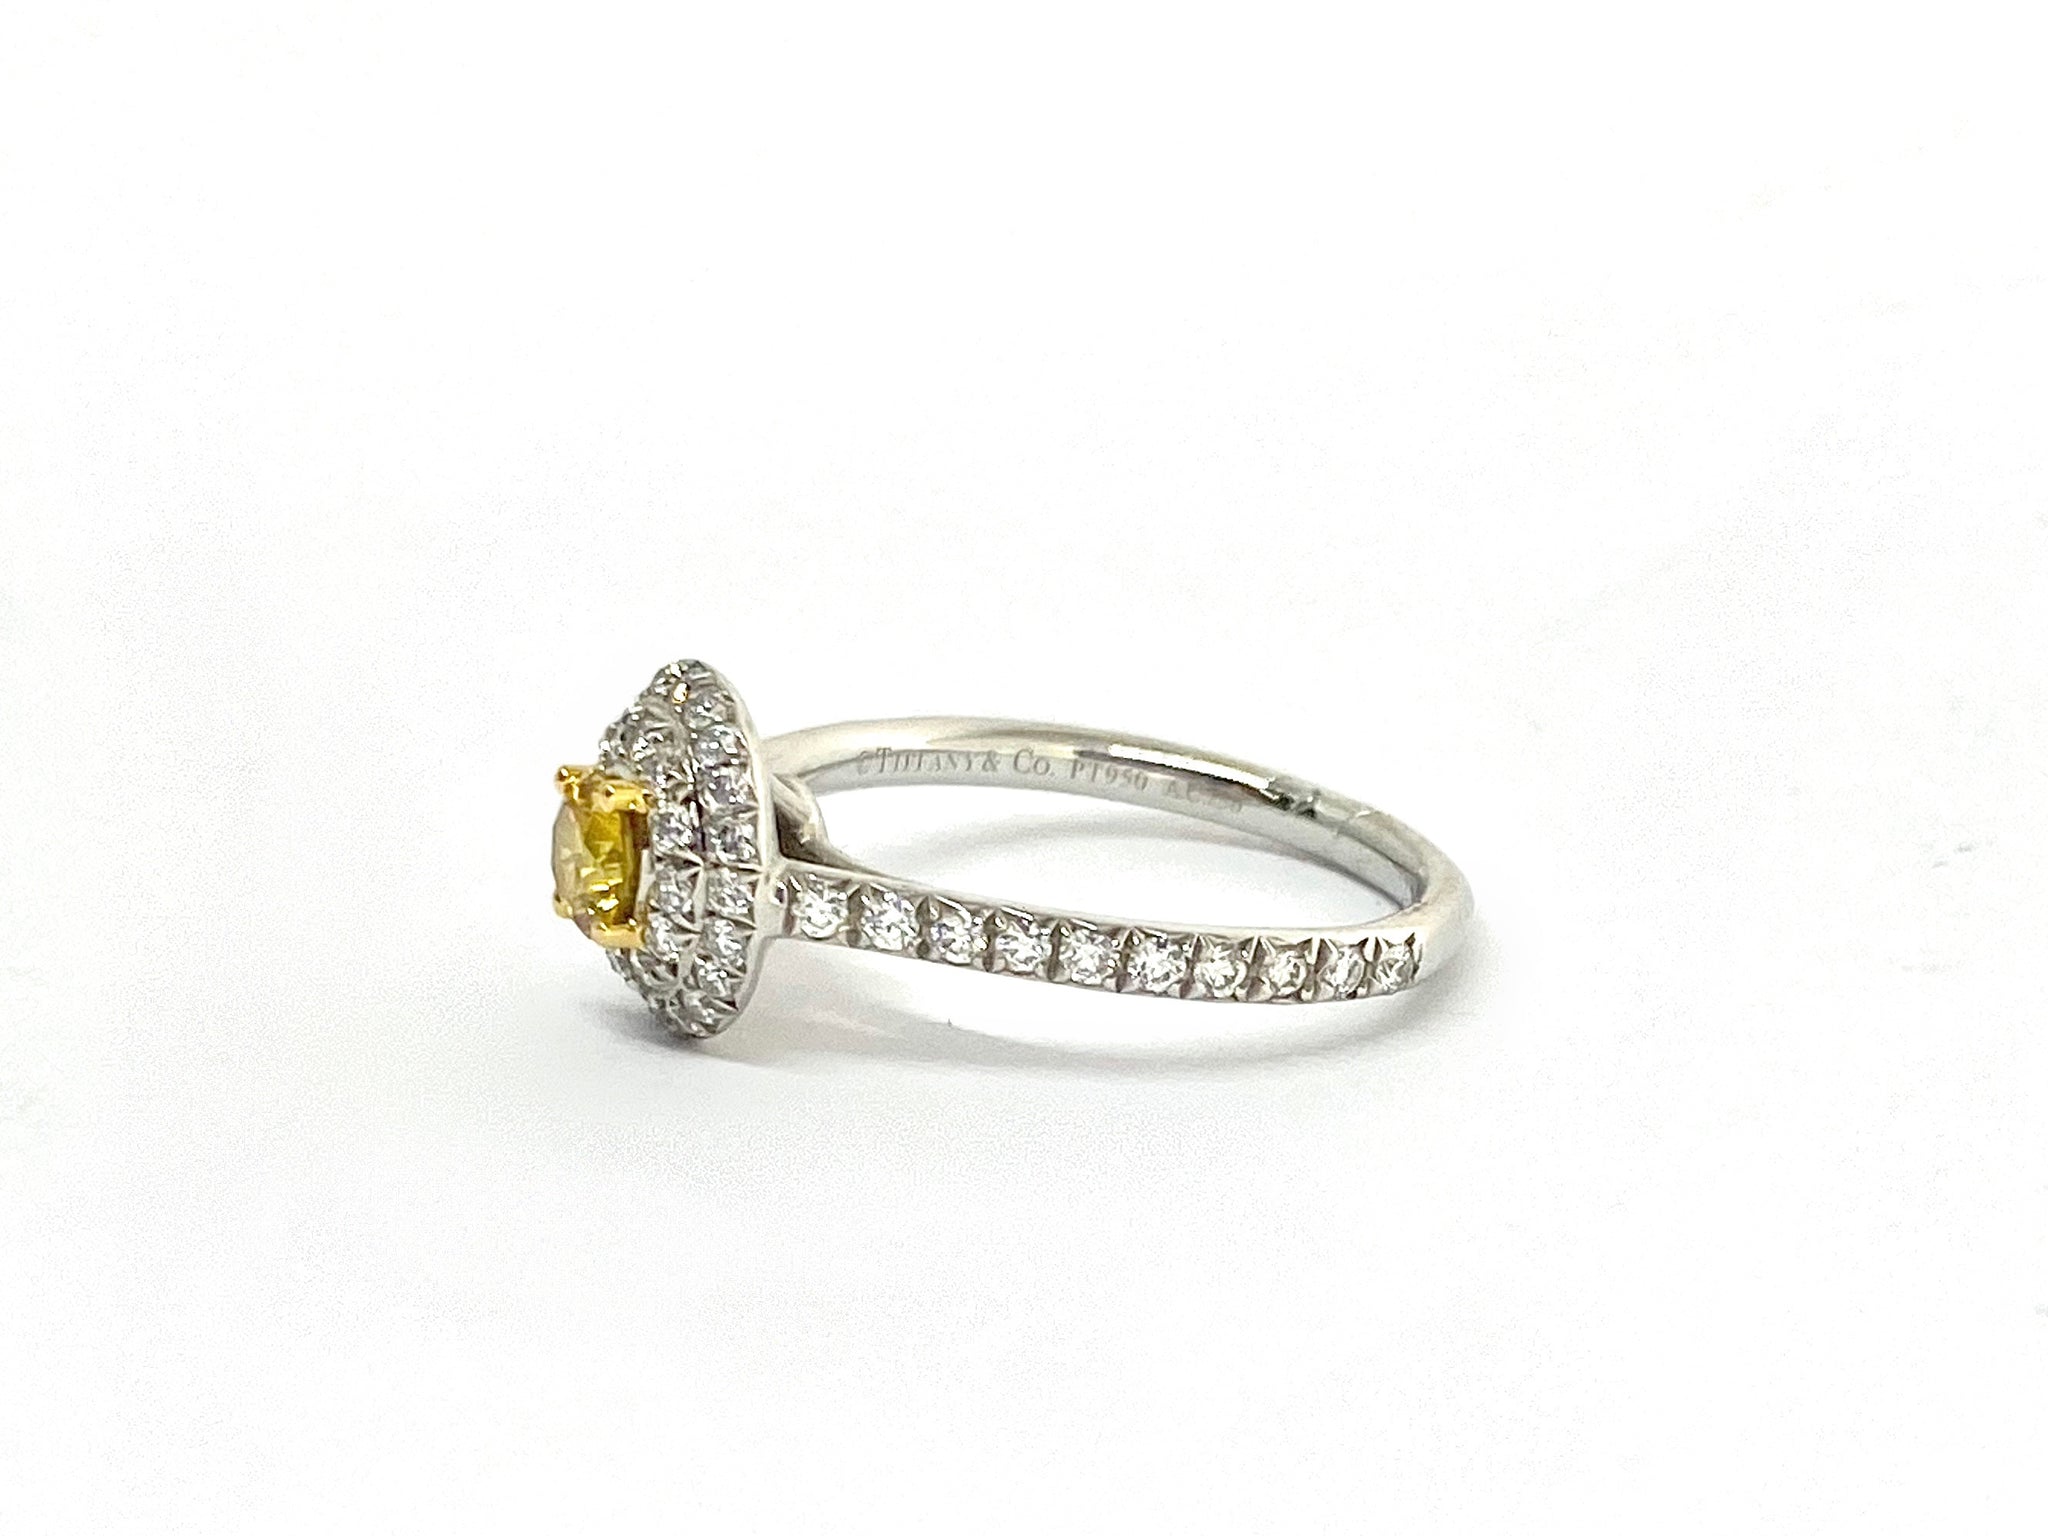 Tiffany & Co. Soleste Diamond Engagement Ring